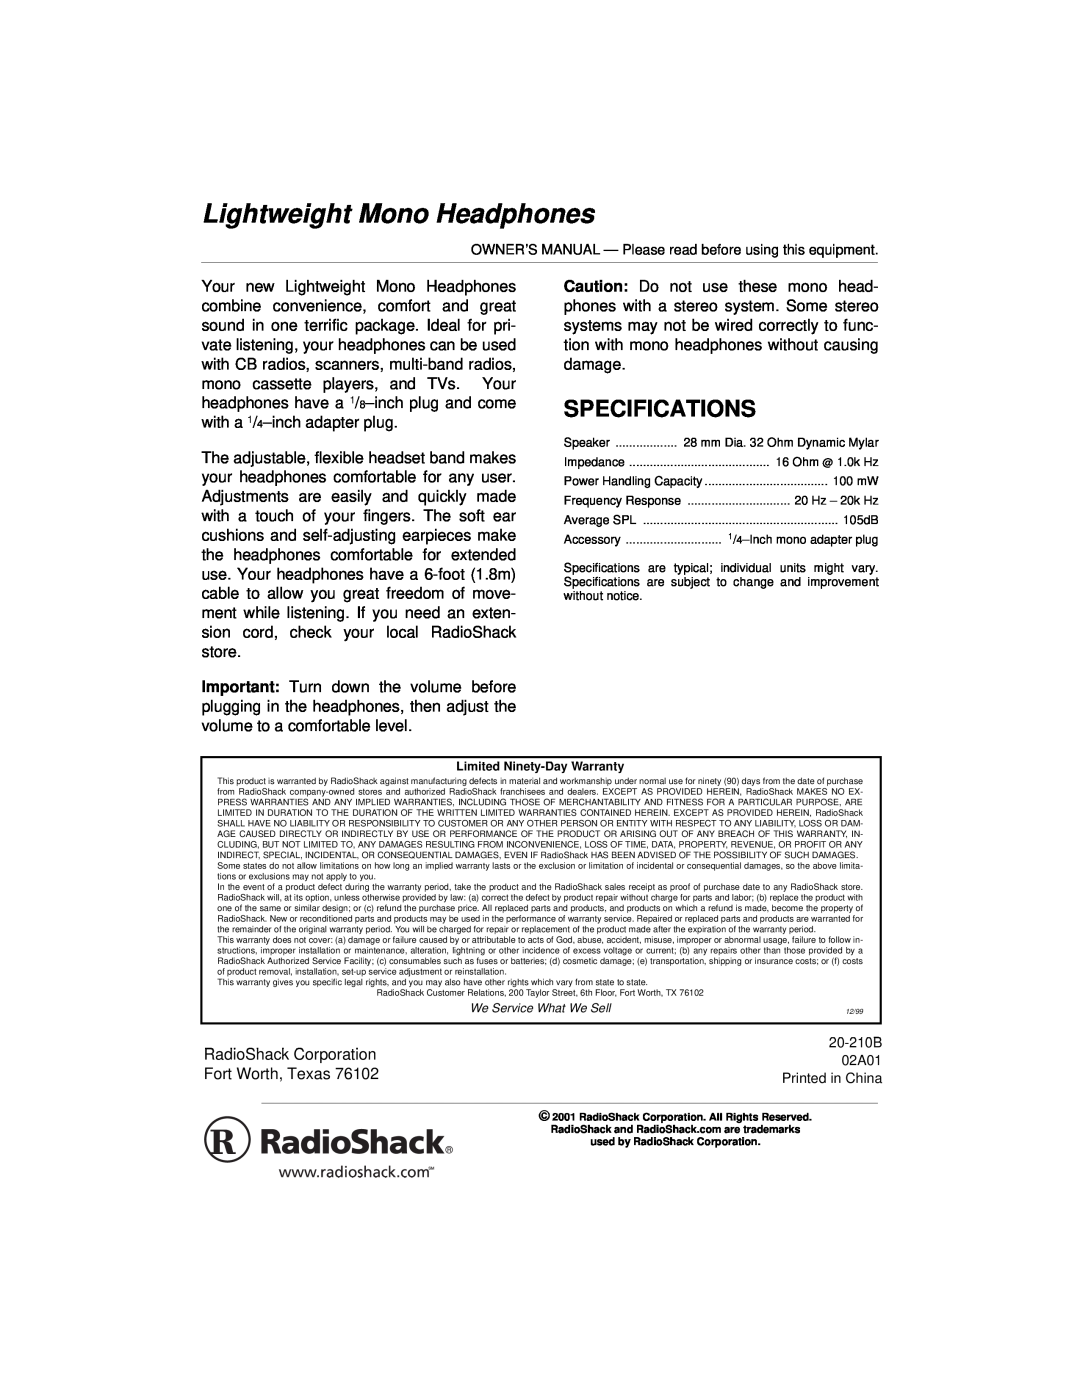 Radio Shack 20-210B specifications Lightweight Mono Headphones, Specifications 